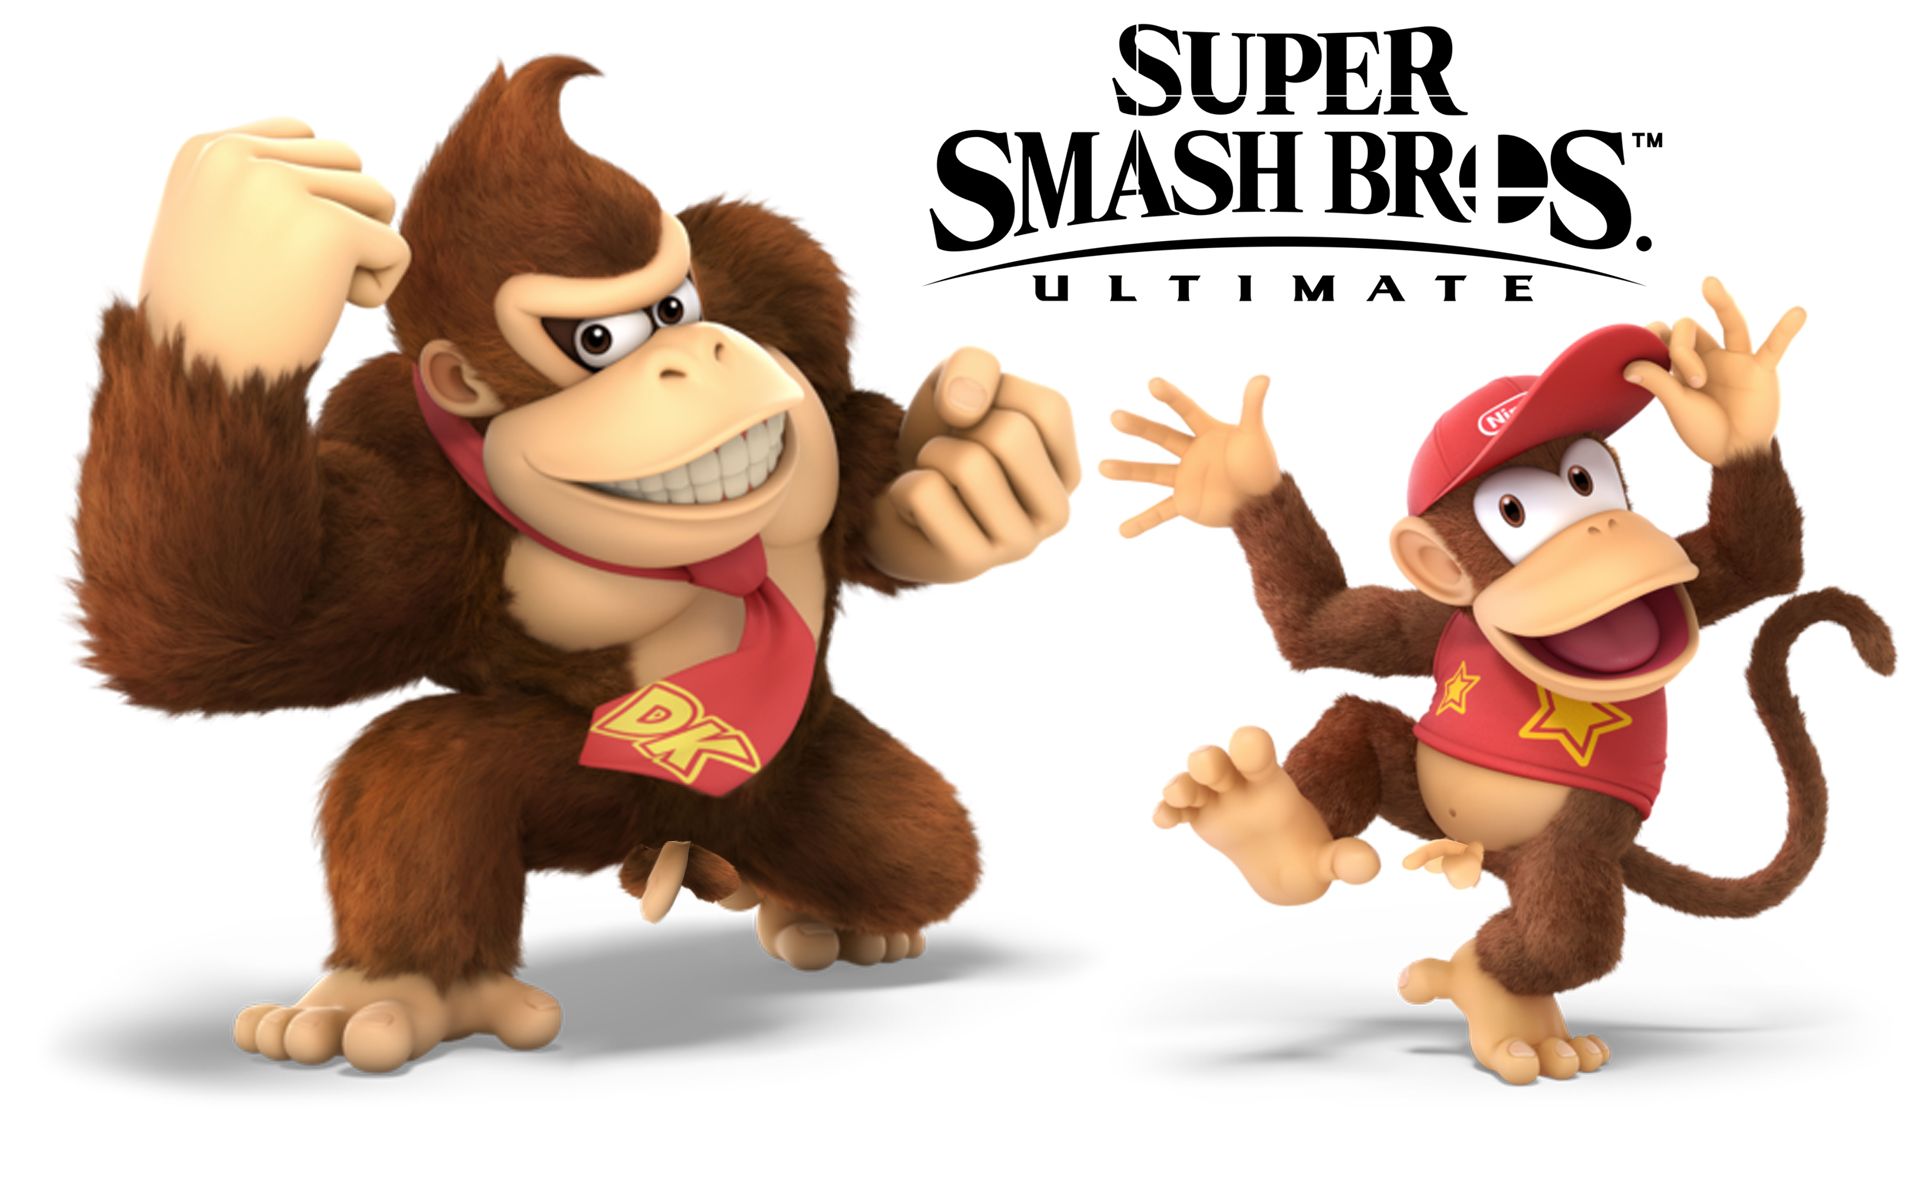 Nintendo Confirms Super Smash Bros Ultimate Will Have Enhanced Ball Physics